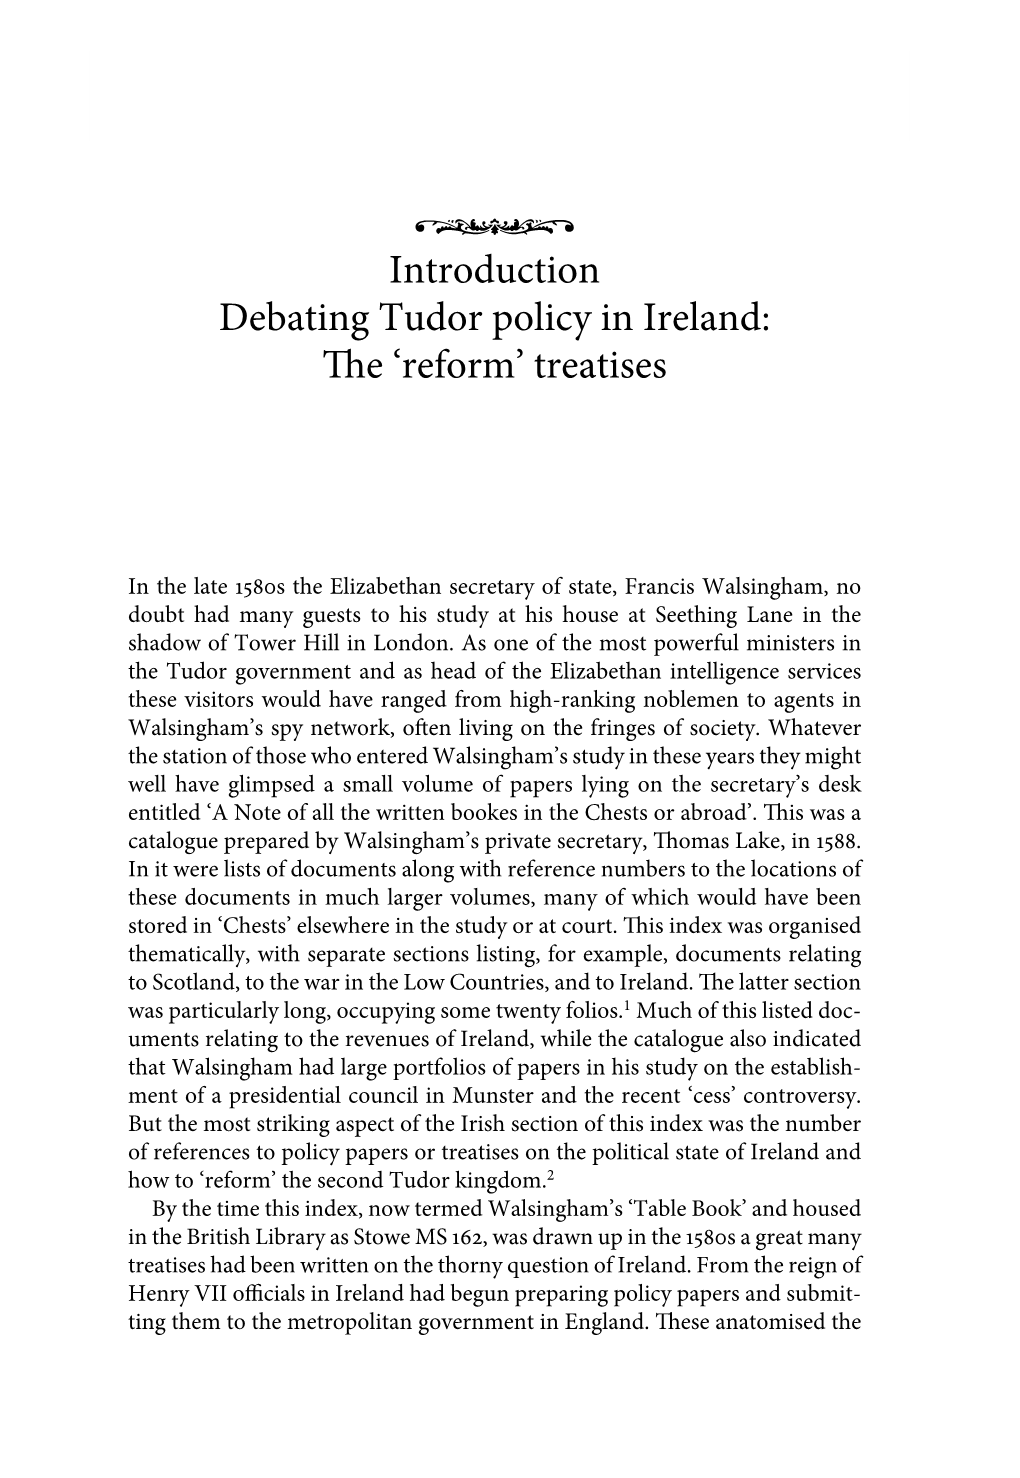 Introduction Debating Tudor Policy in Ireland: the 'Reform'